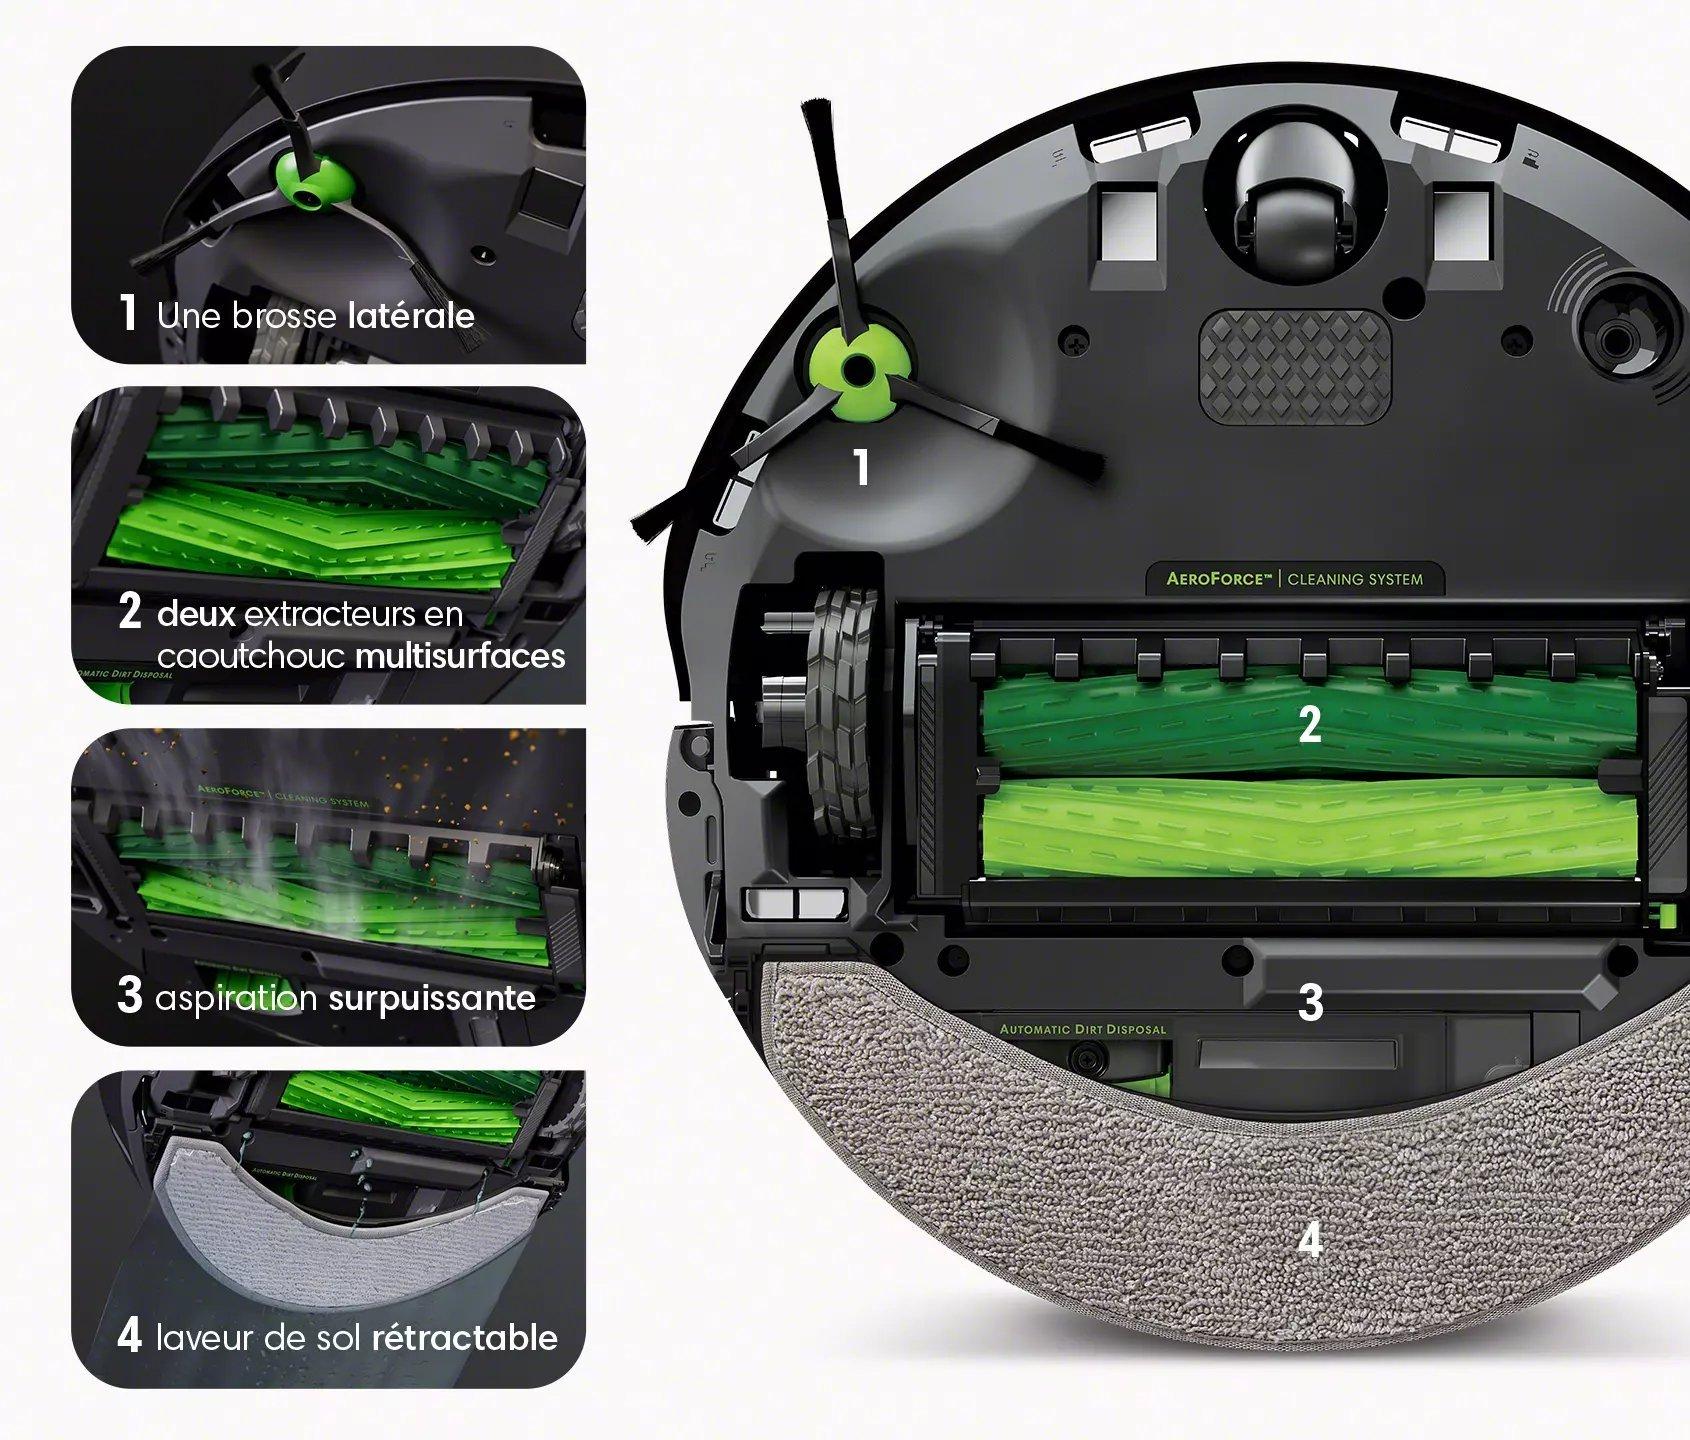 iRobot Roomba Combo j7 robot aspirateur Sans sac Noir, Acier inoxydable